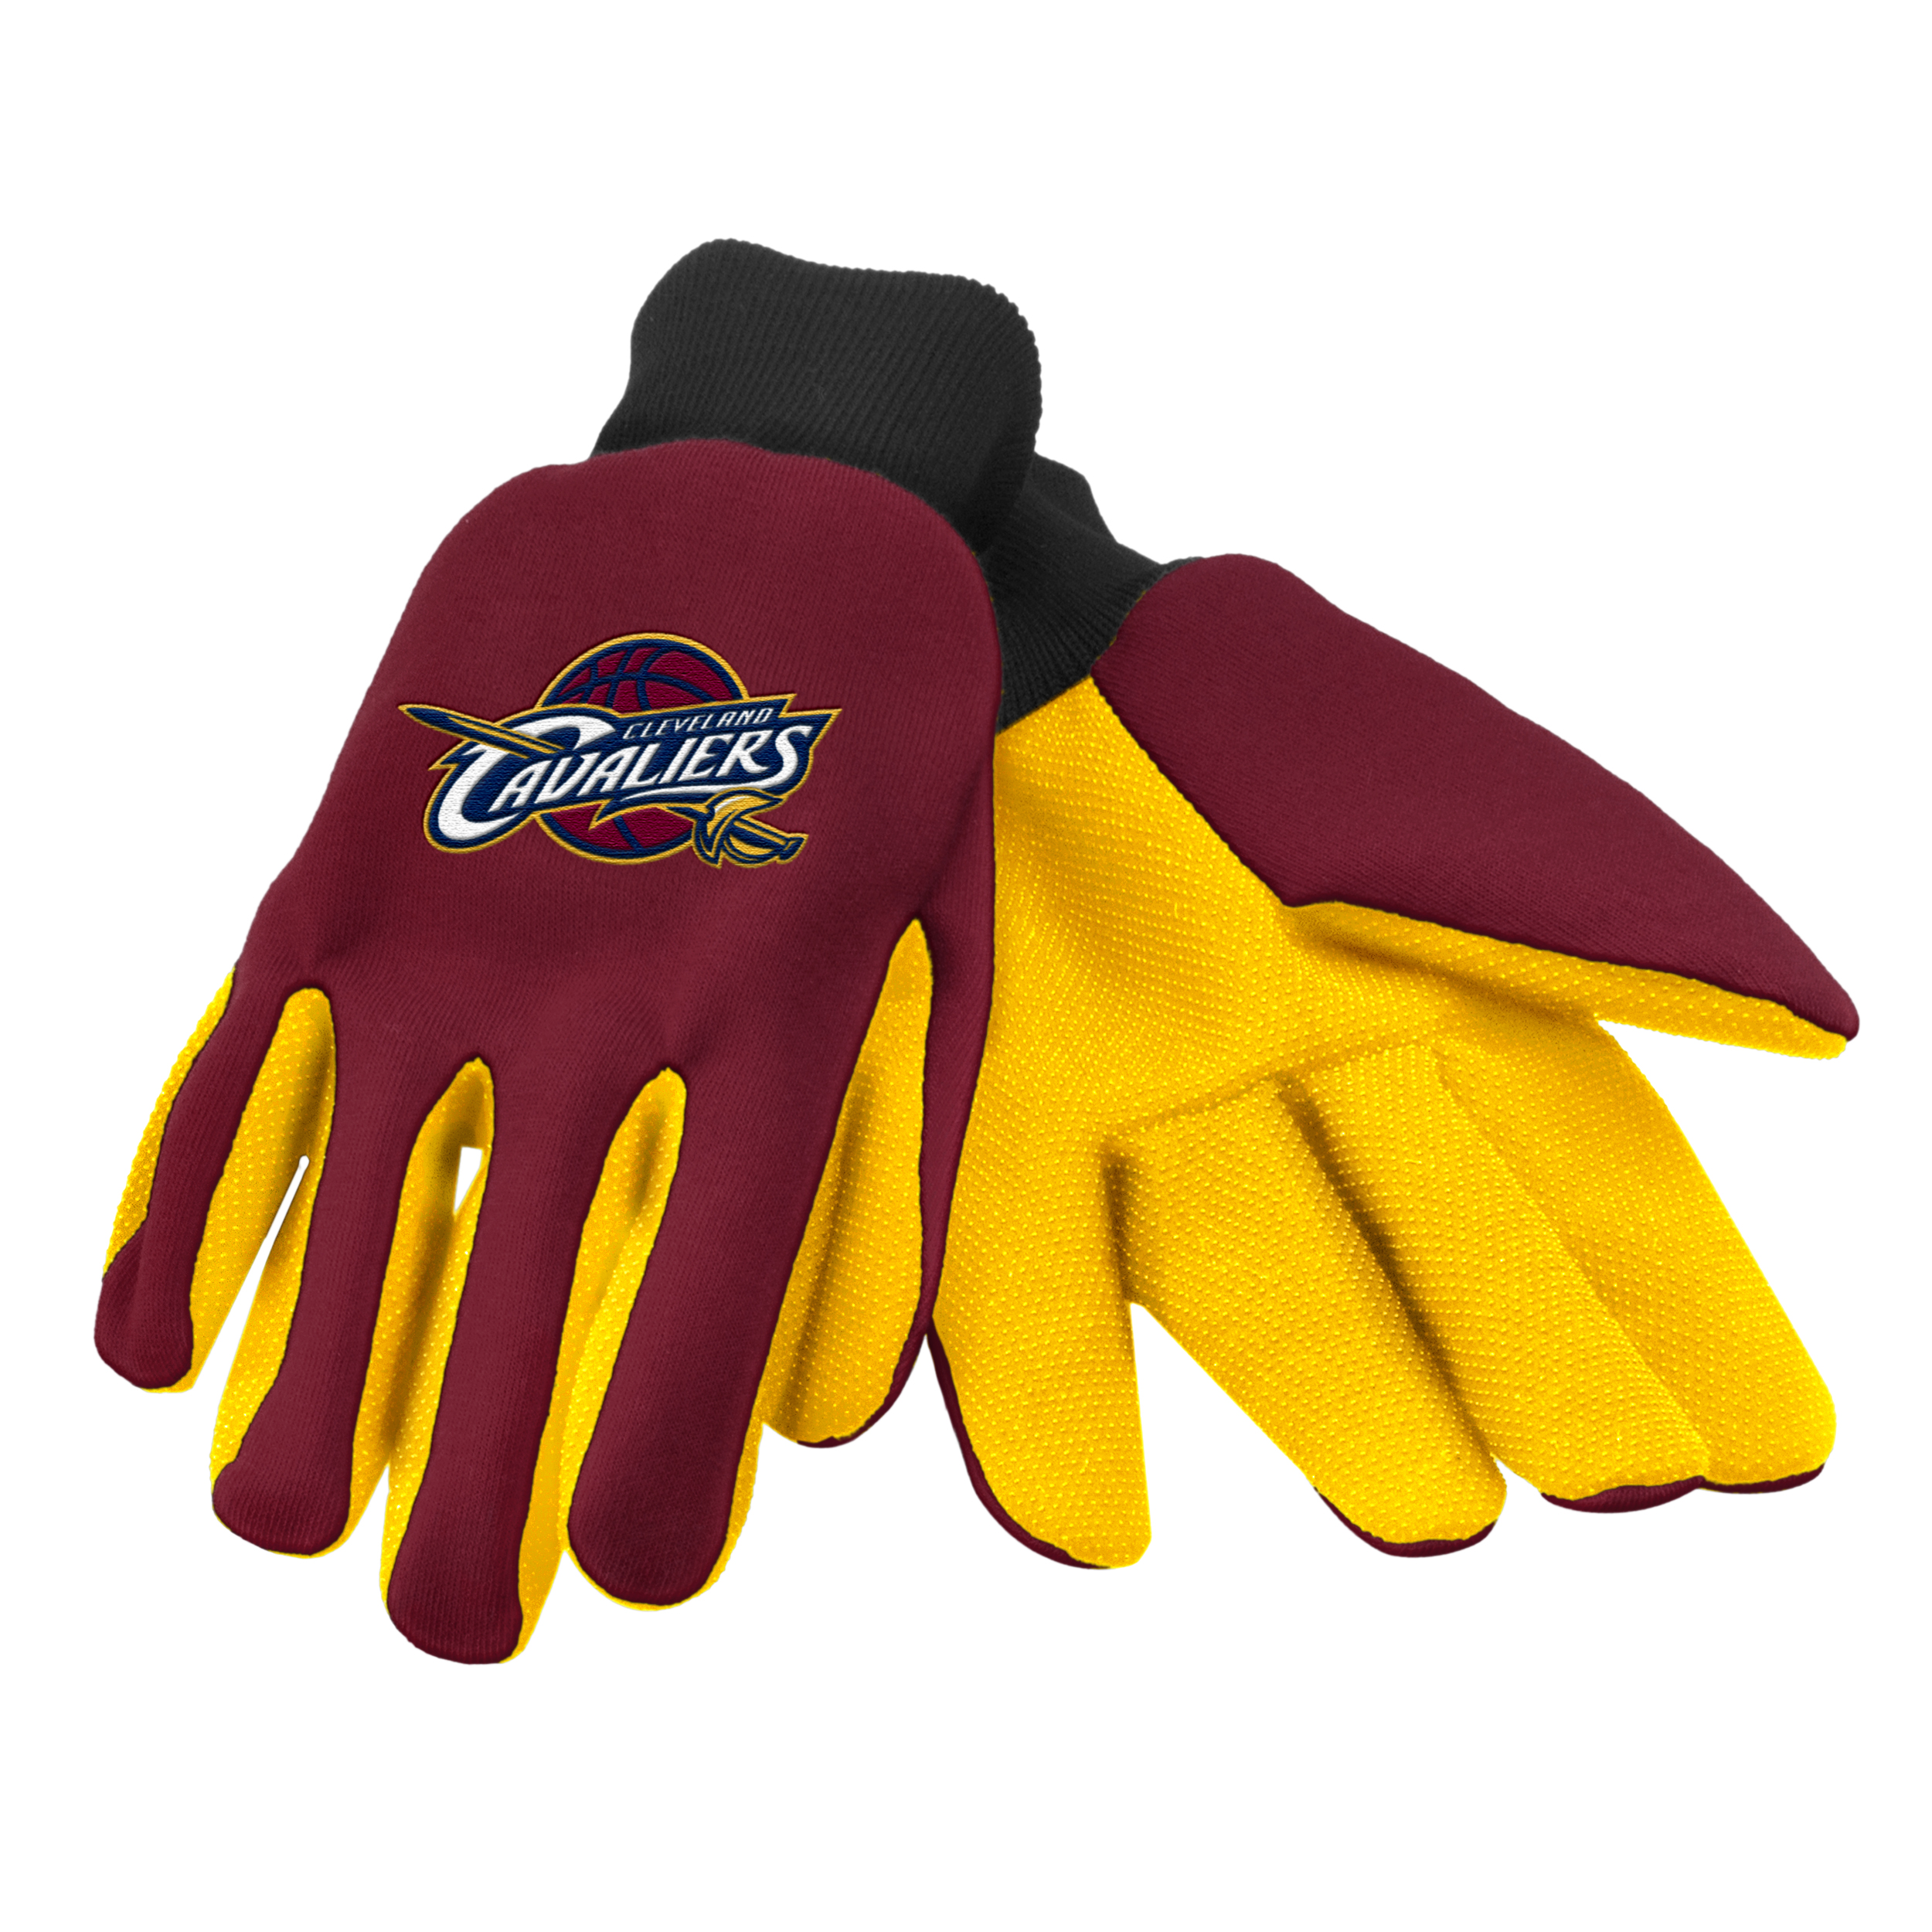 NBA Cleveland Cavaliers Men's Gloves